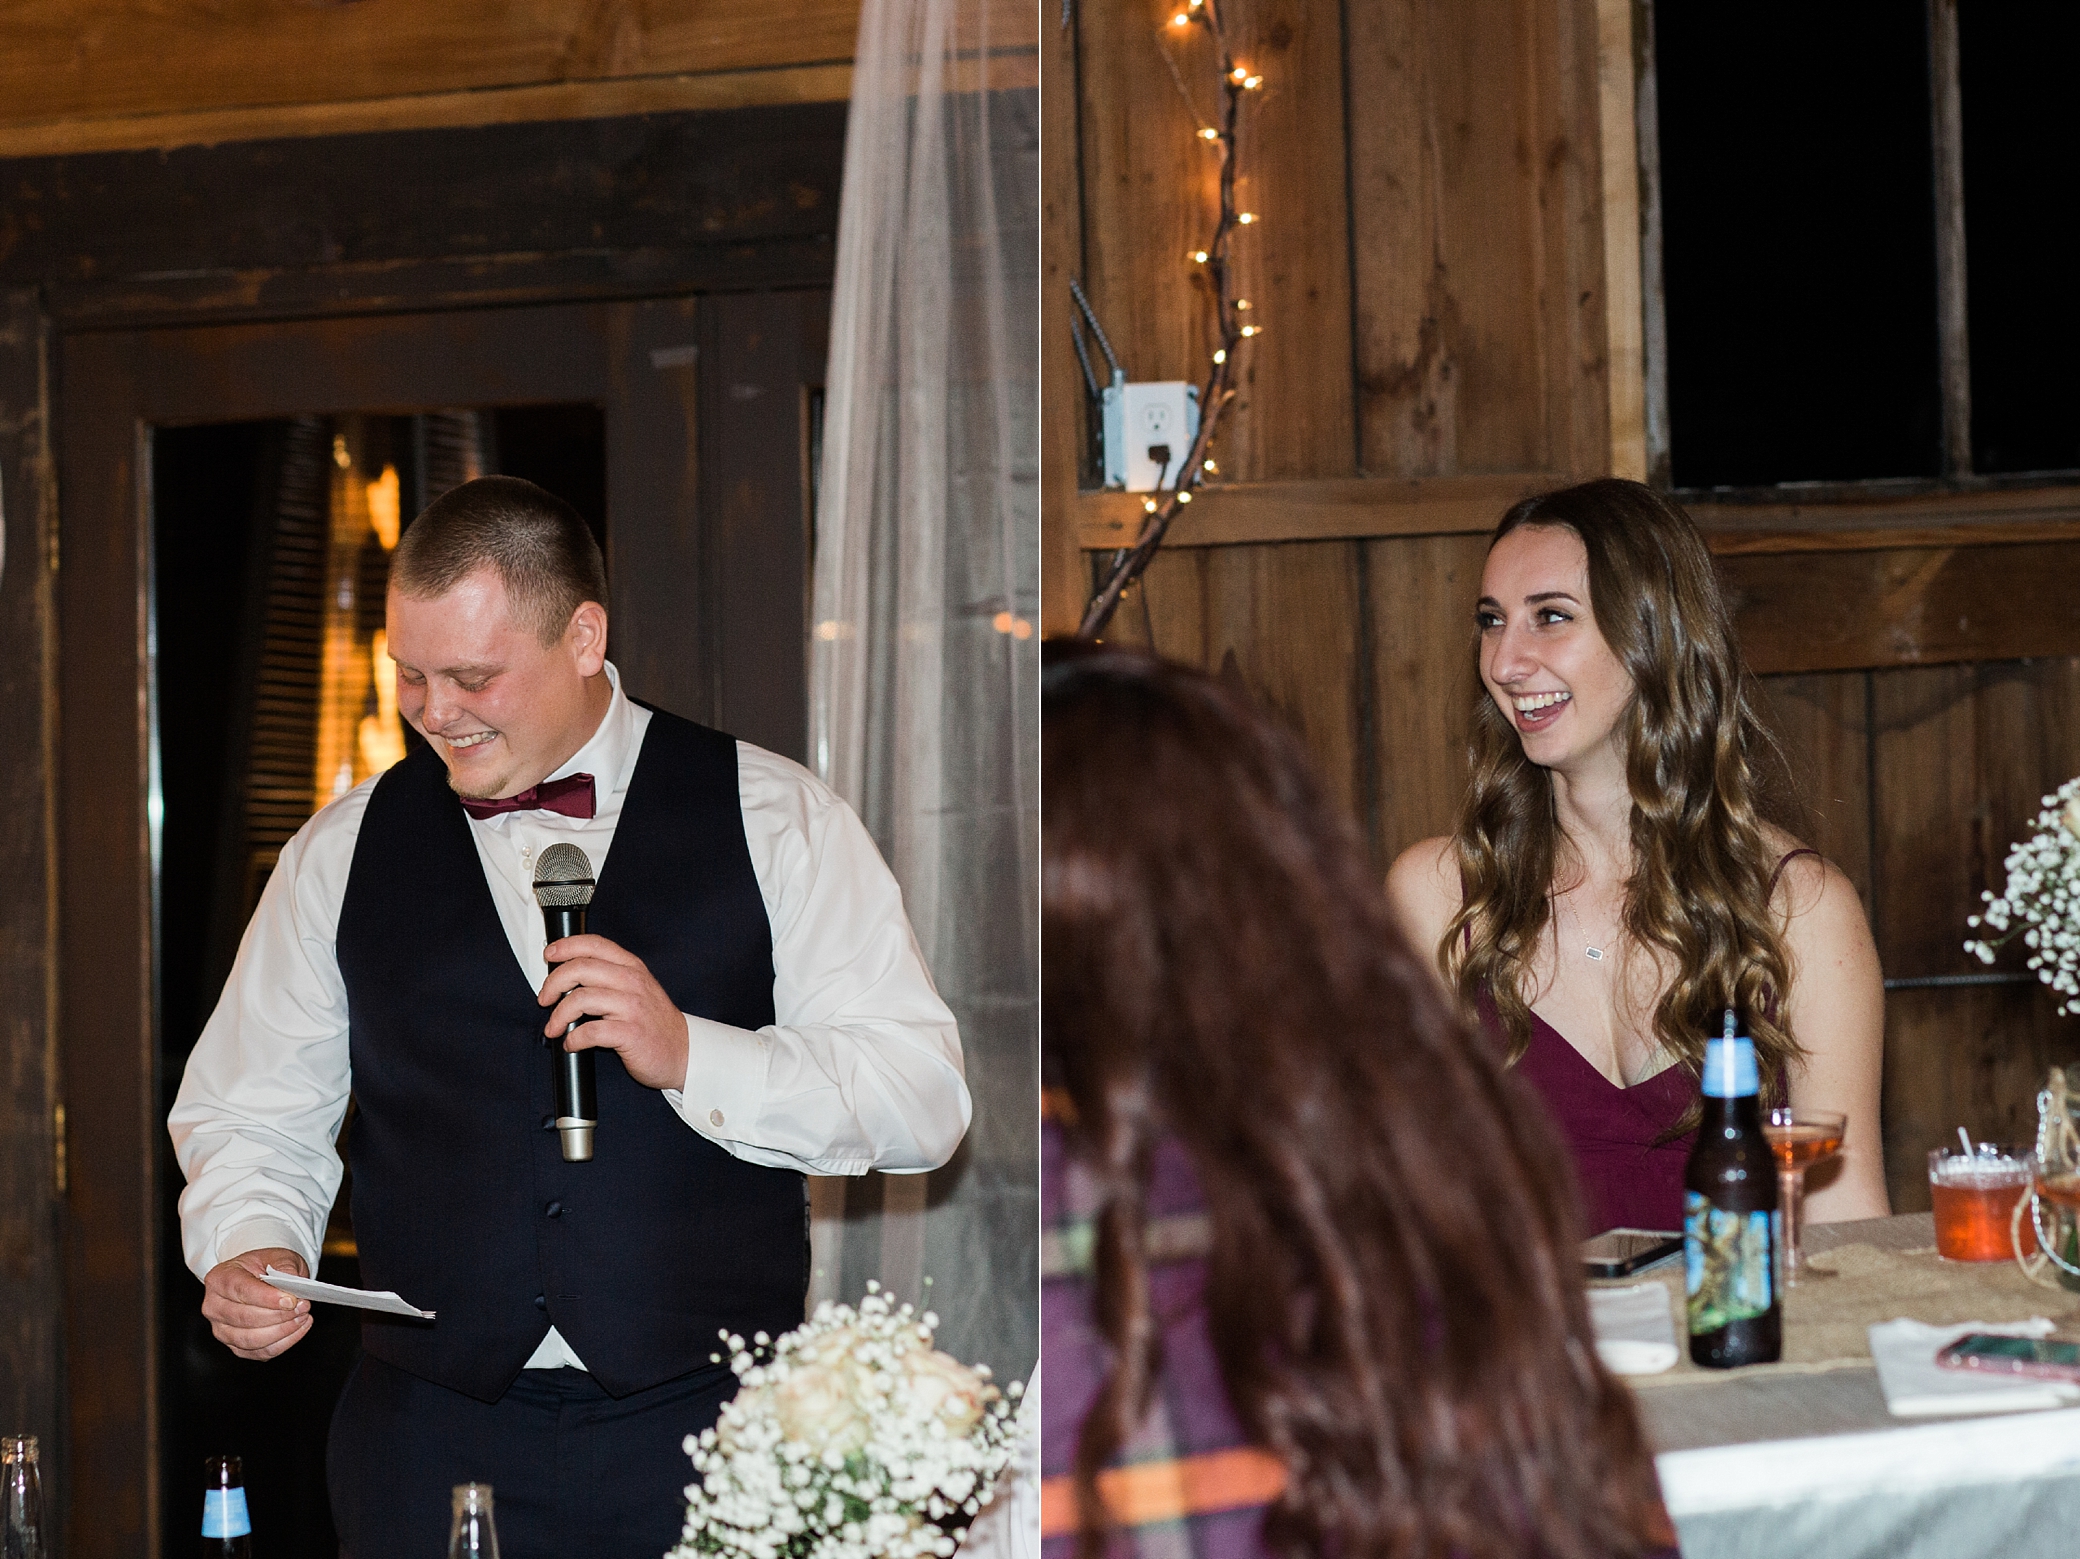 Wedding Toasts at Reception | Megan Montalvo Photography 